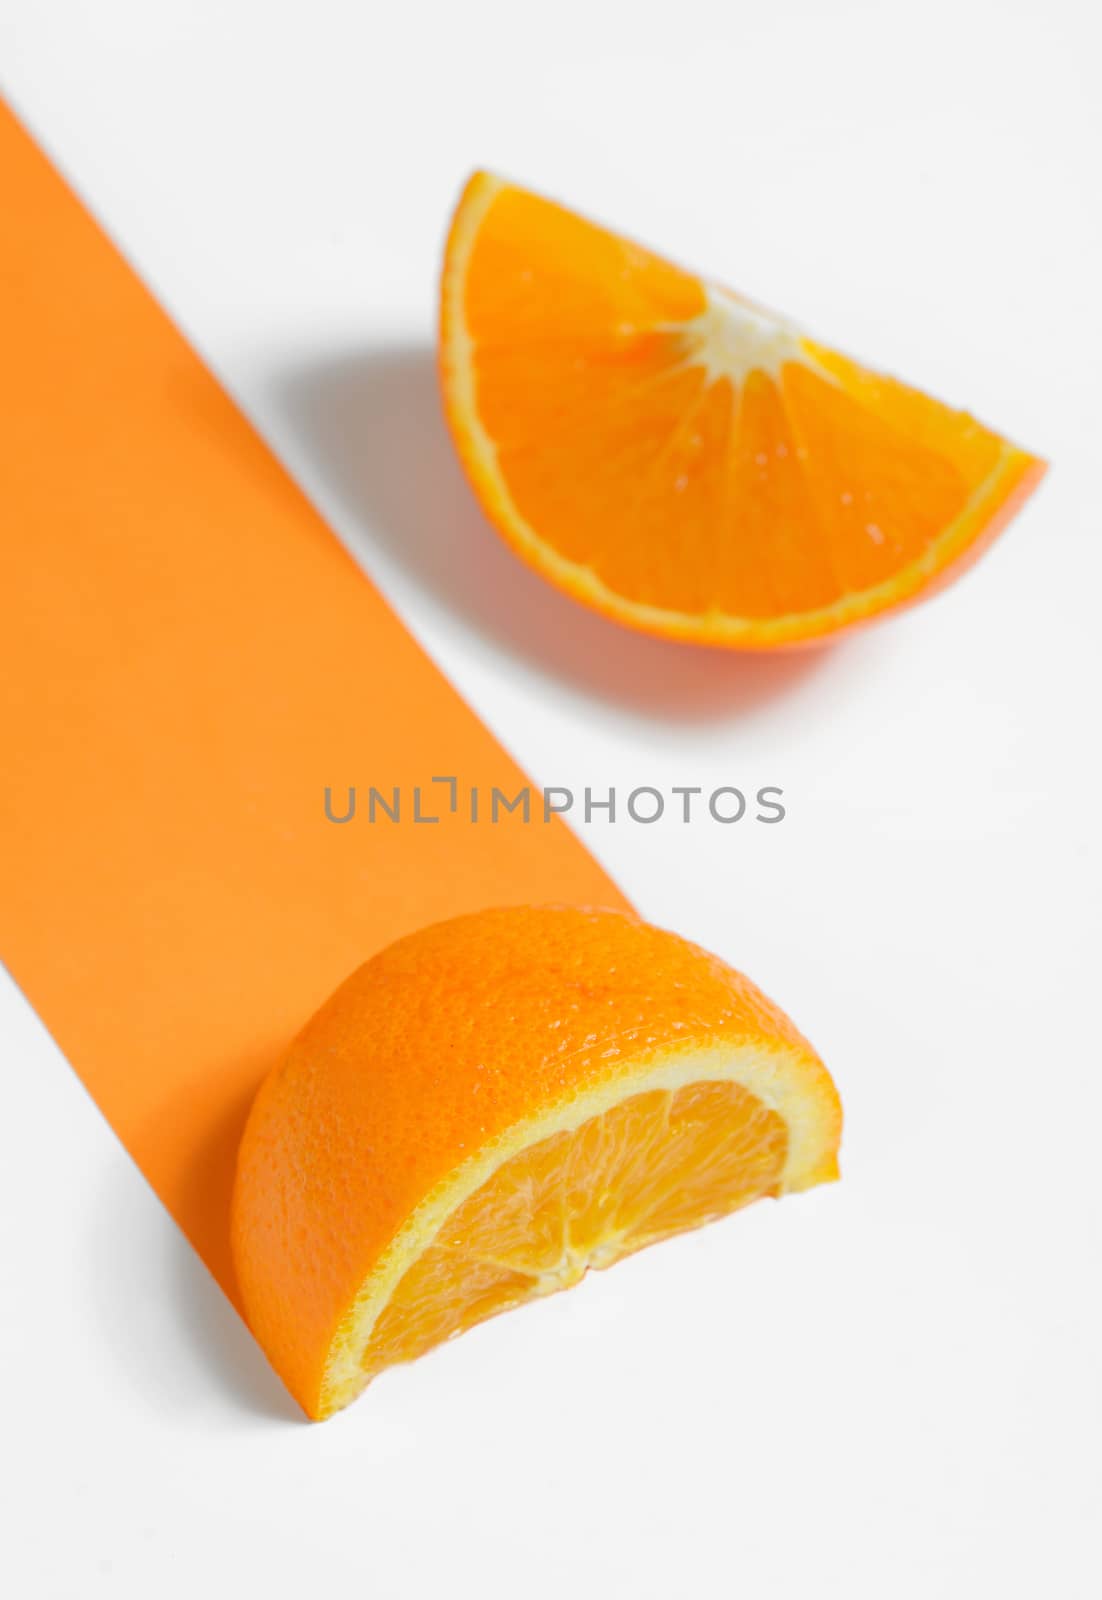 Path of Slices Orange on white background